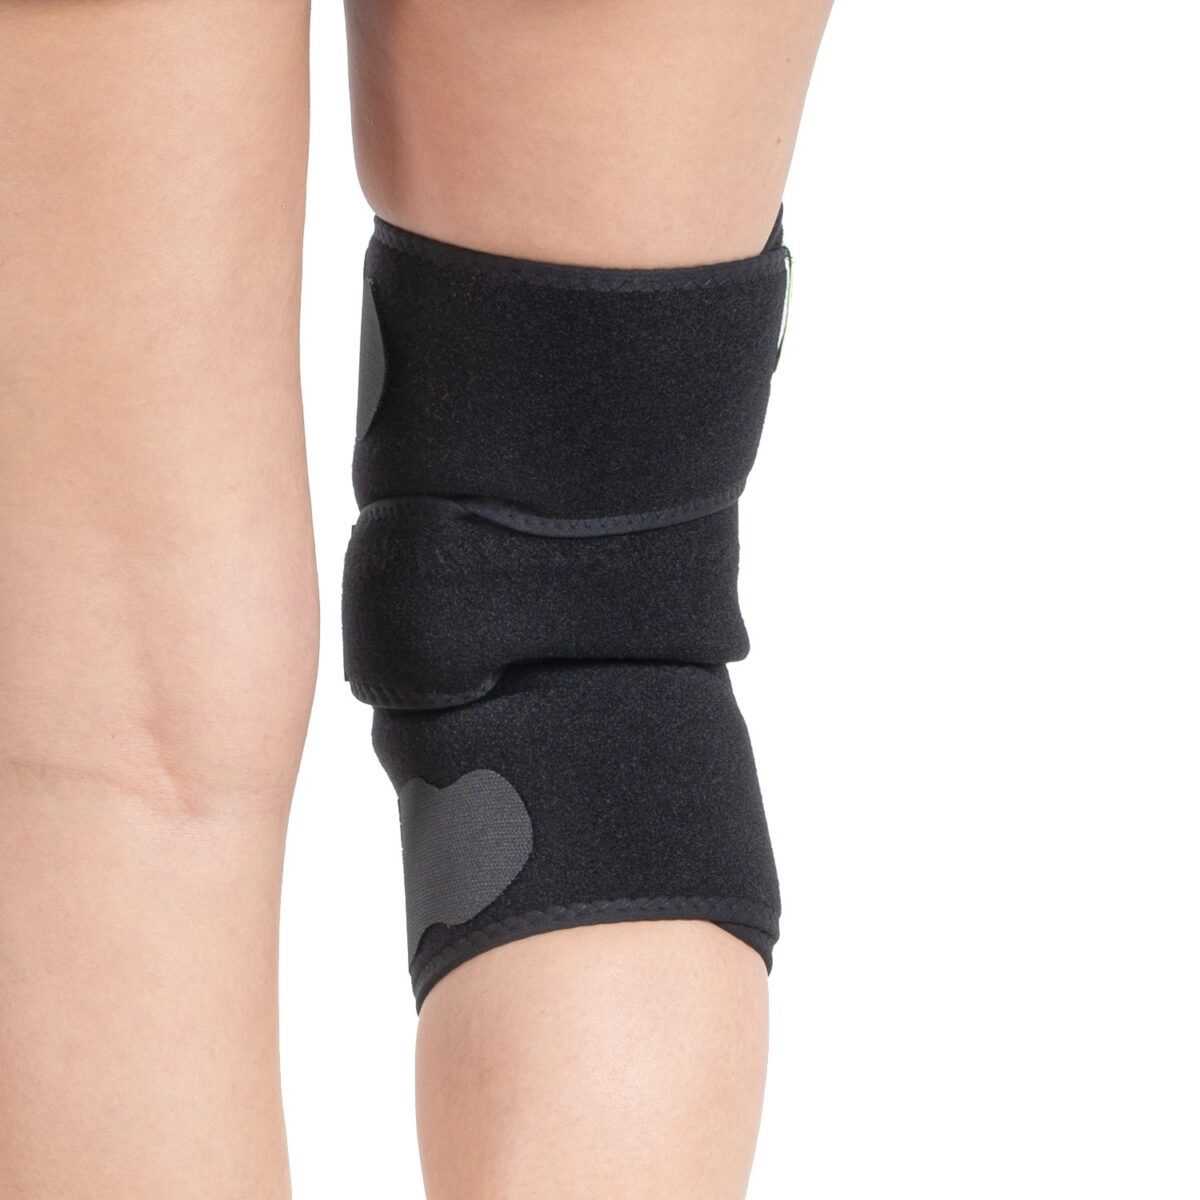 wingmed orthopedic equipments W504 patella knee support 06